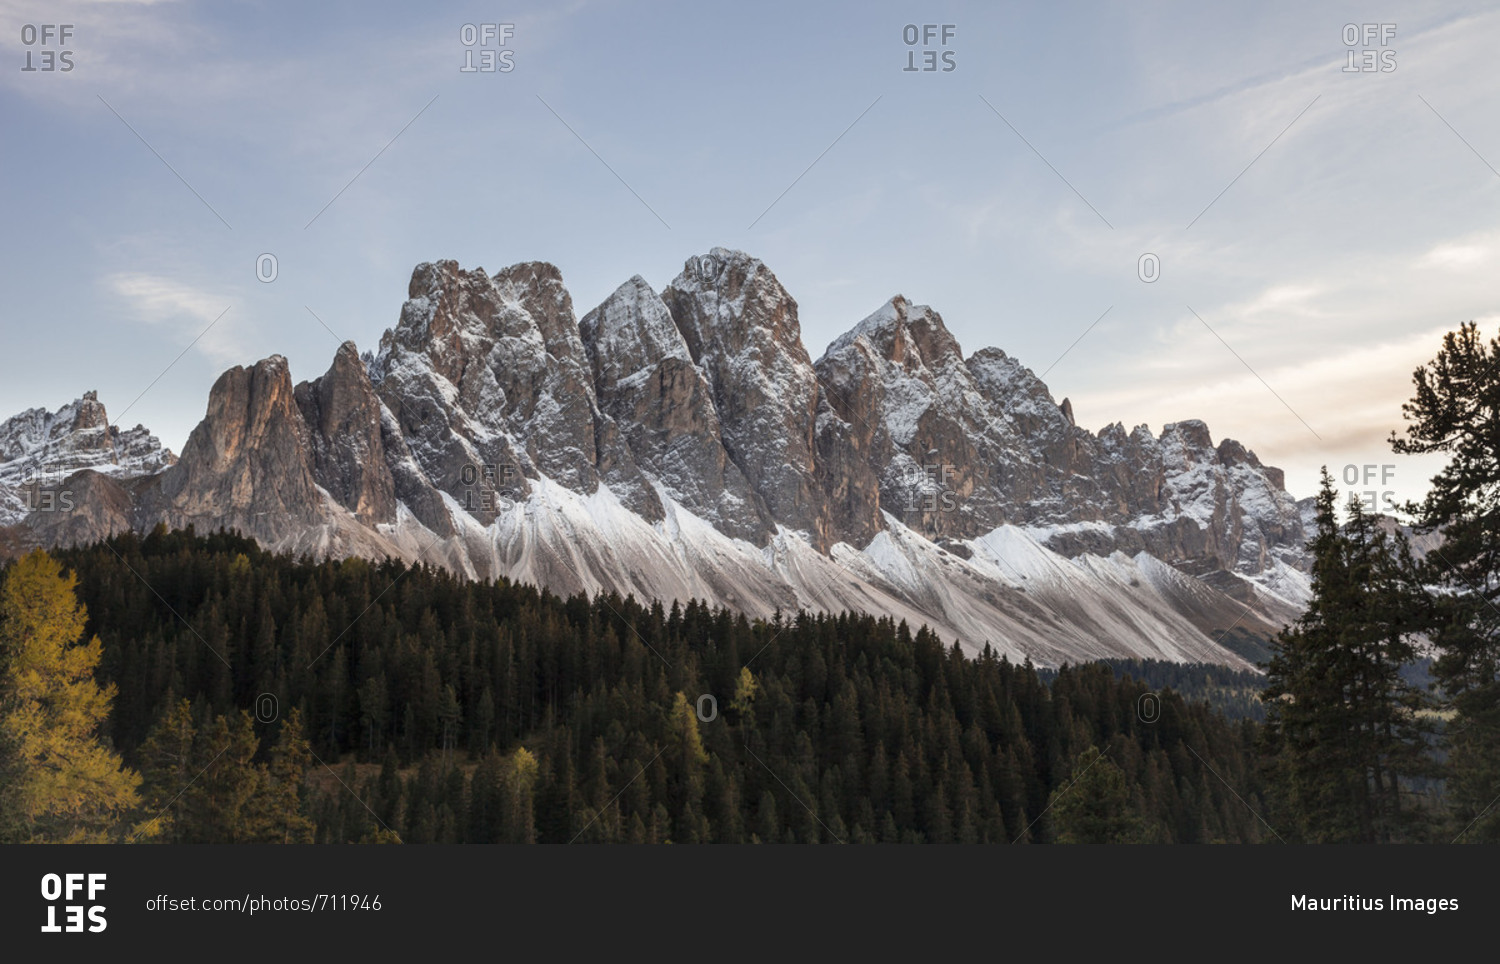 The gruppo delle Odle (mountain) (3025 m), Puez-Geisler Nature Park, Dolomites, Val di Funes, Italy, Europe